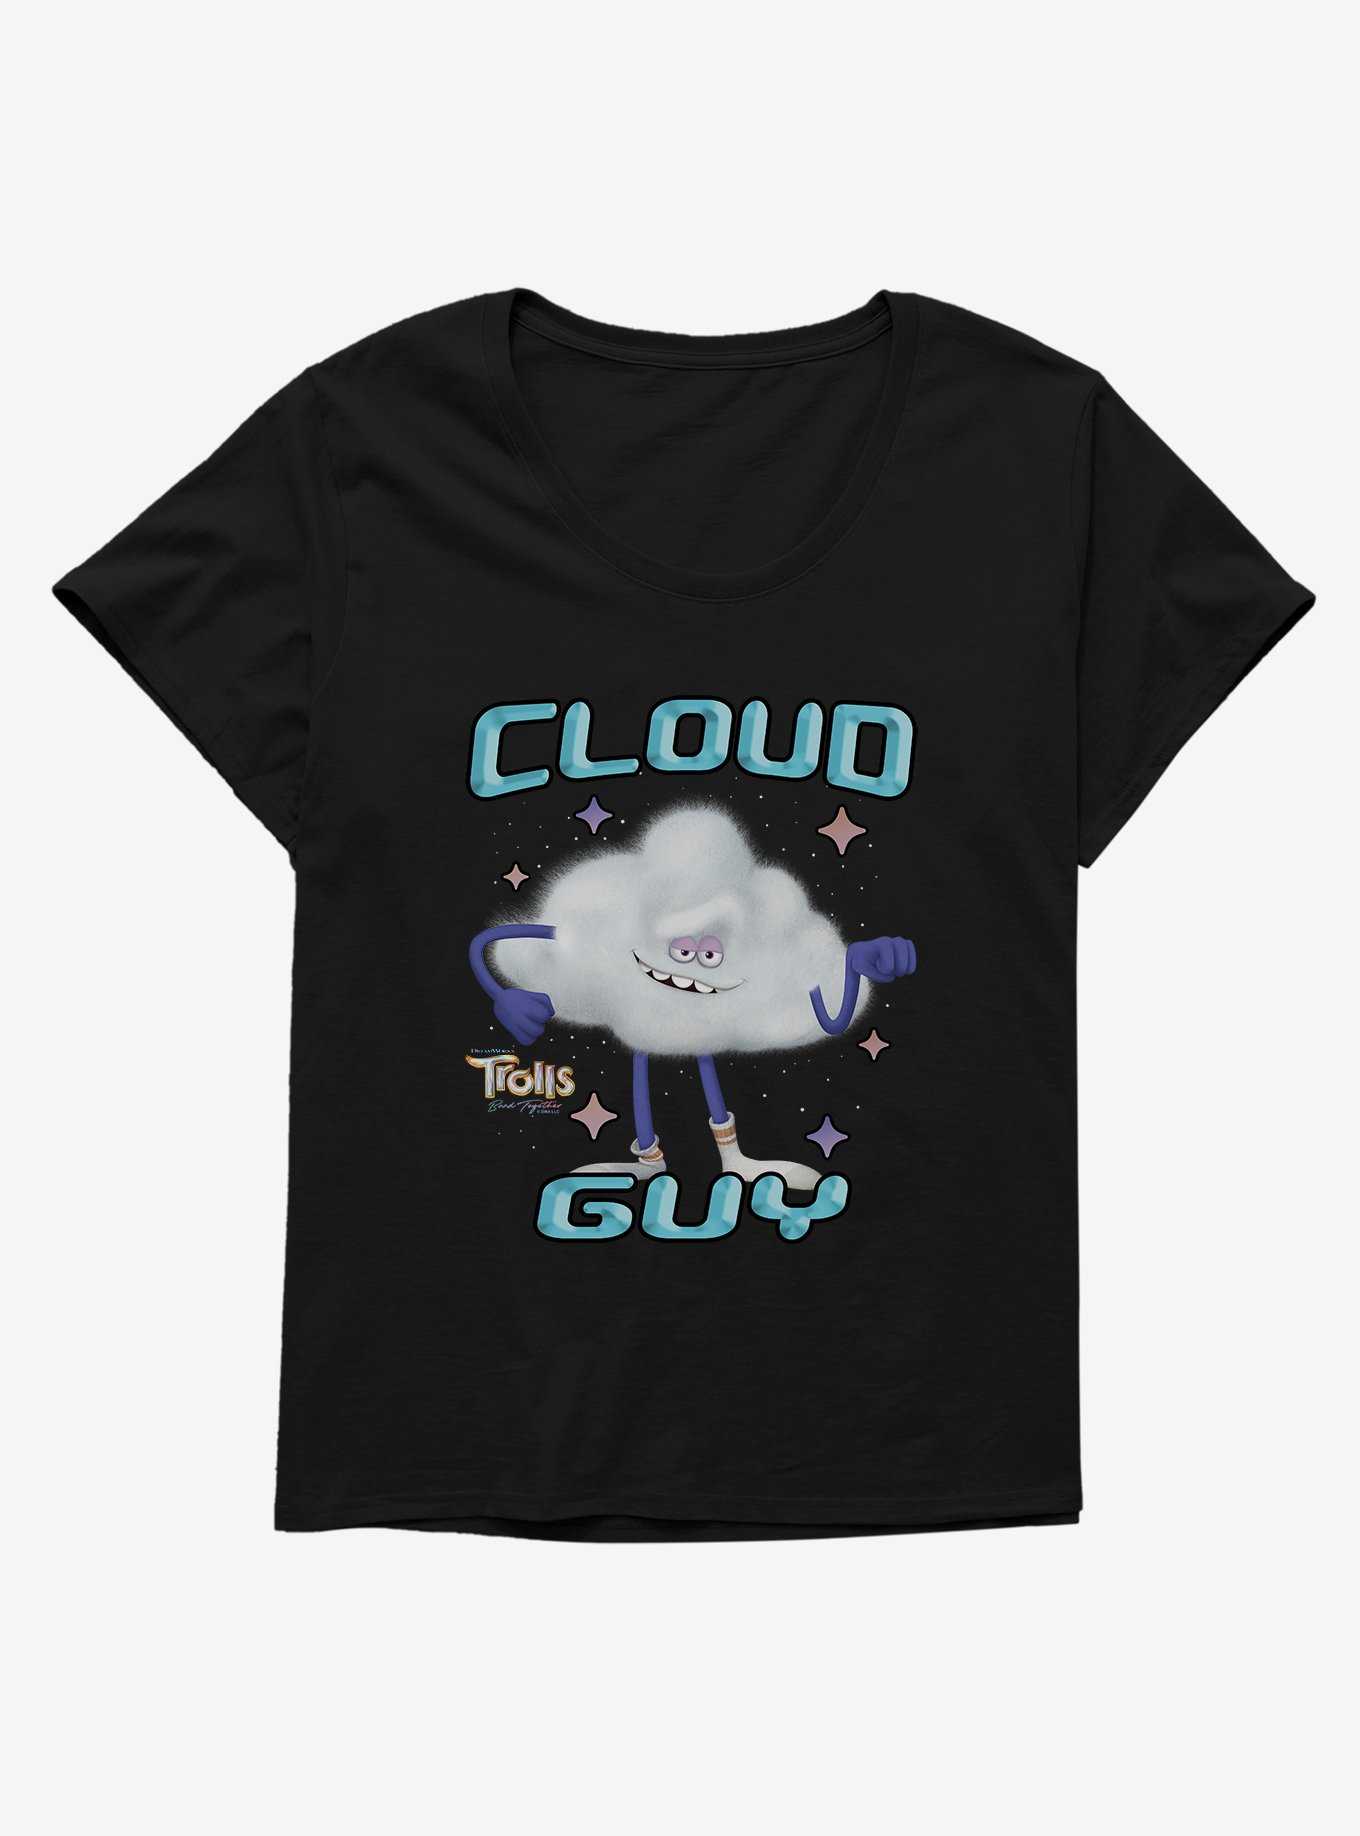 Trolls 3 Band Together Cloud Guy Girls T-Shirt Plus Size, , hi-res